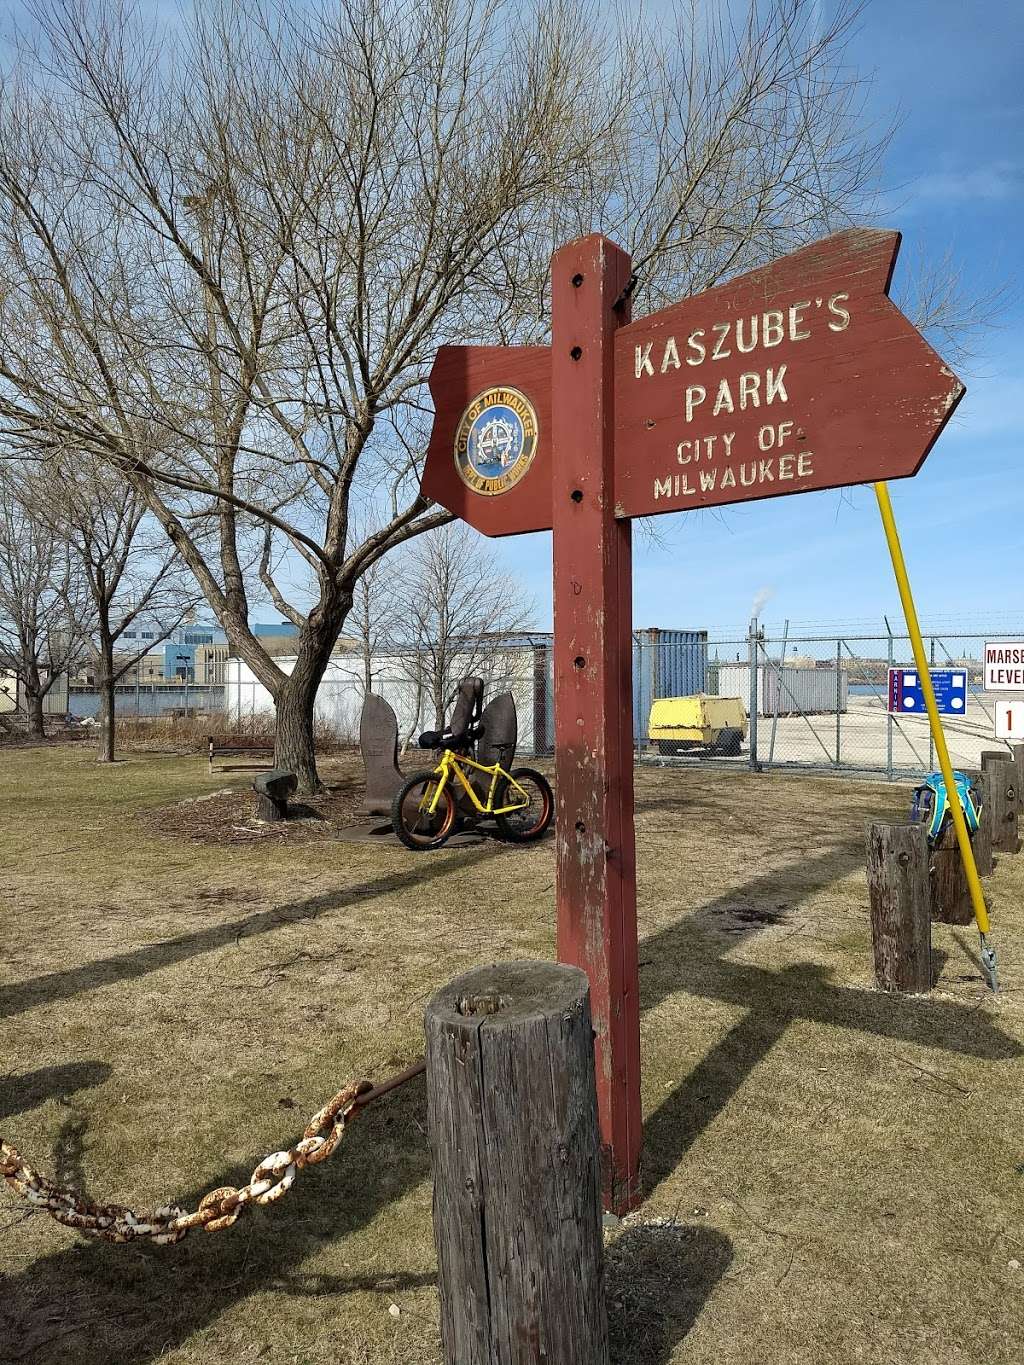 Kaszubes Park | S Carferry Dr, Milwaukee, WI 53207, USA